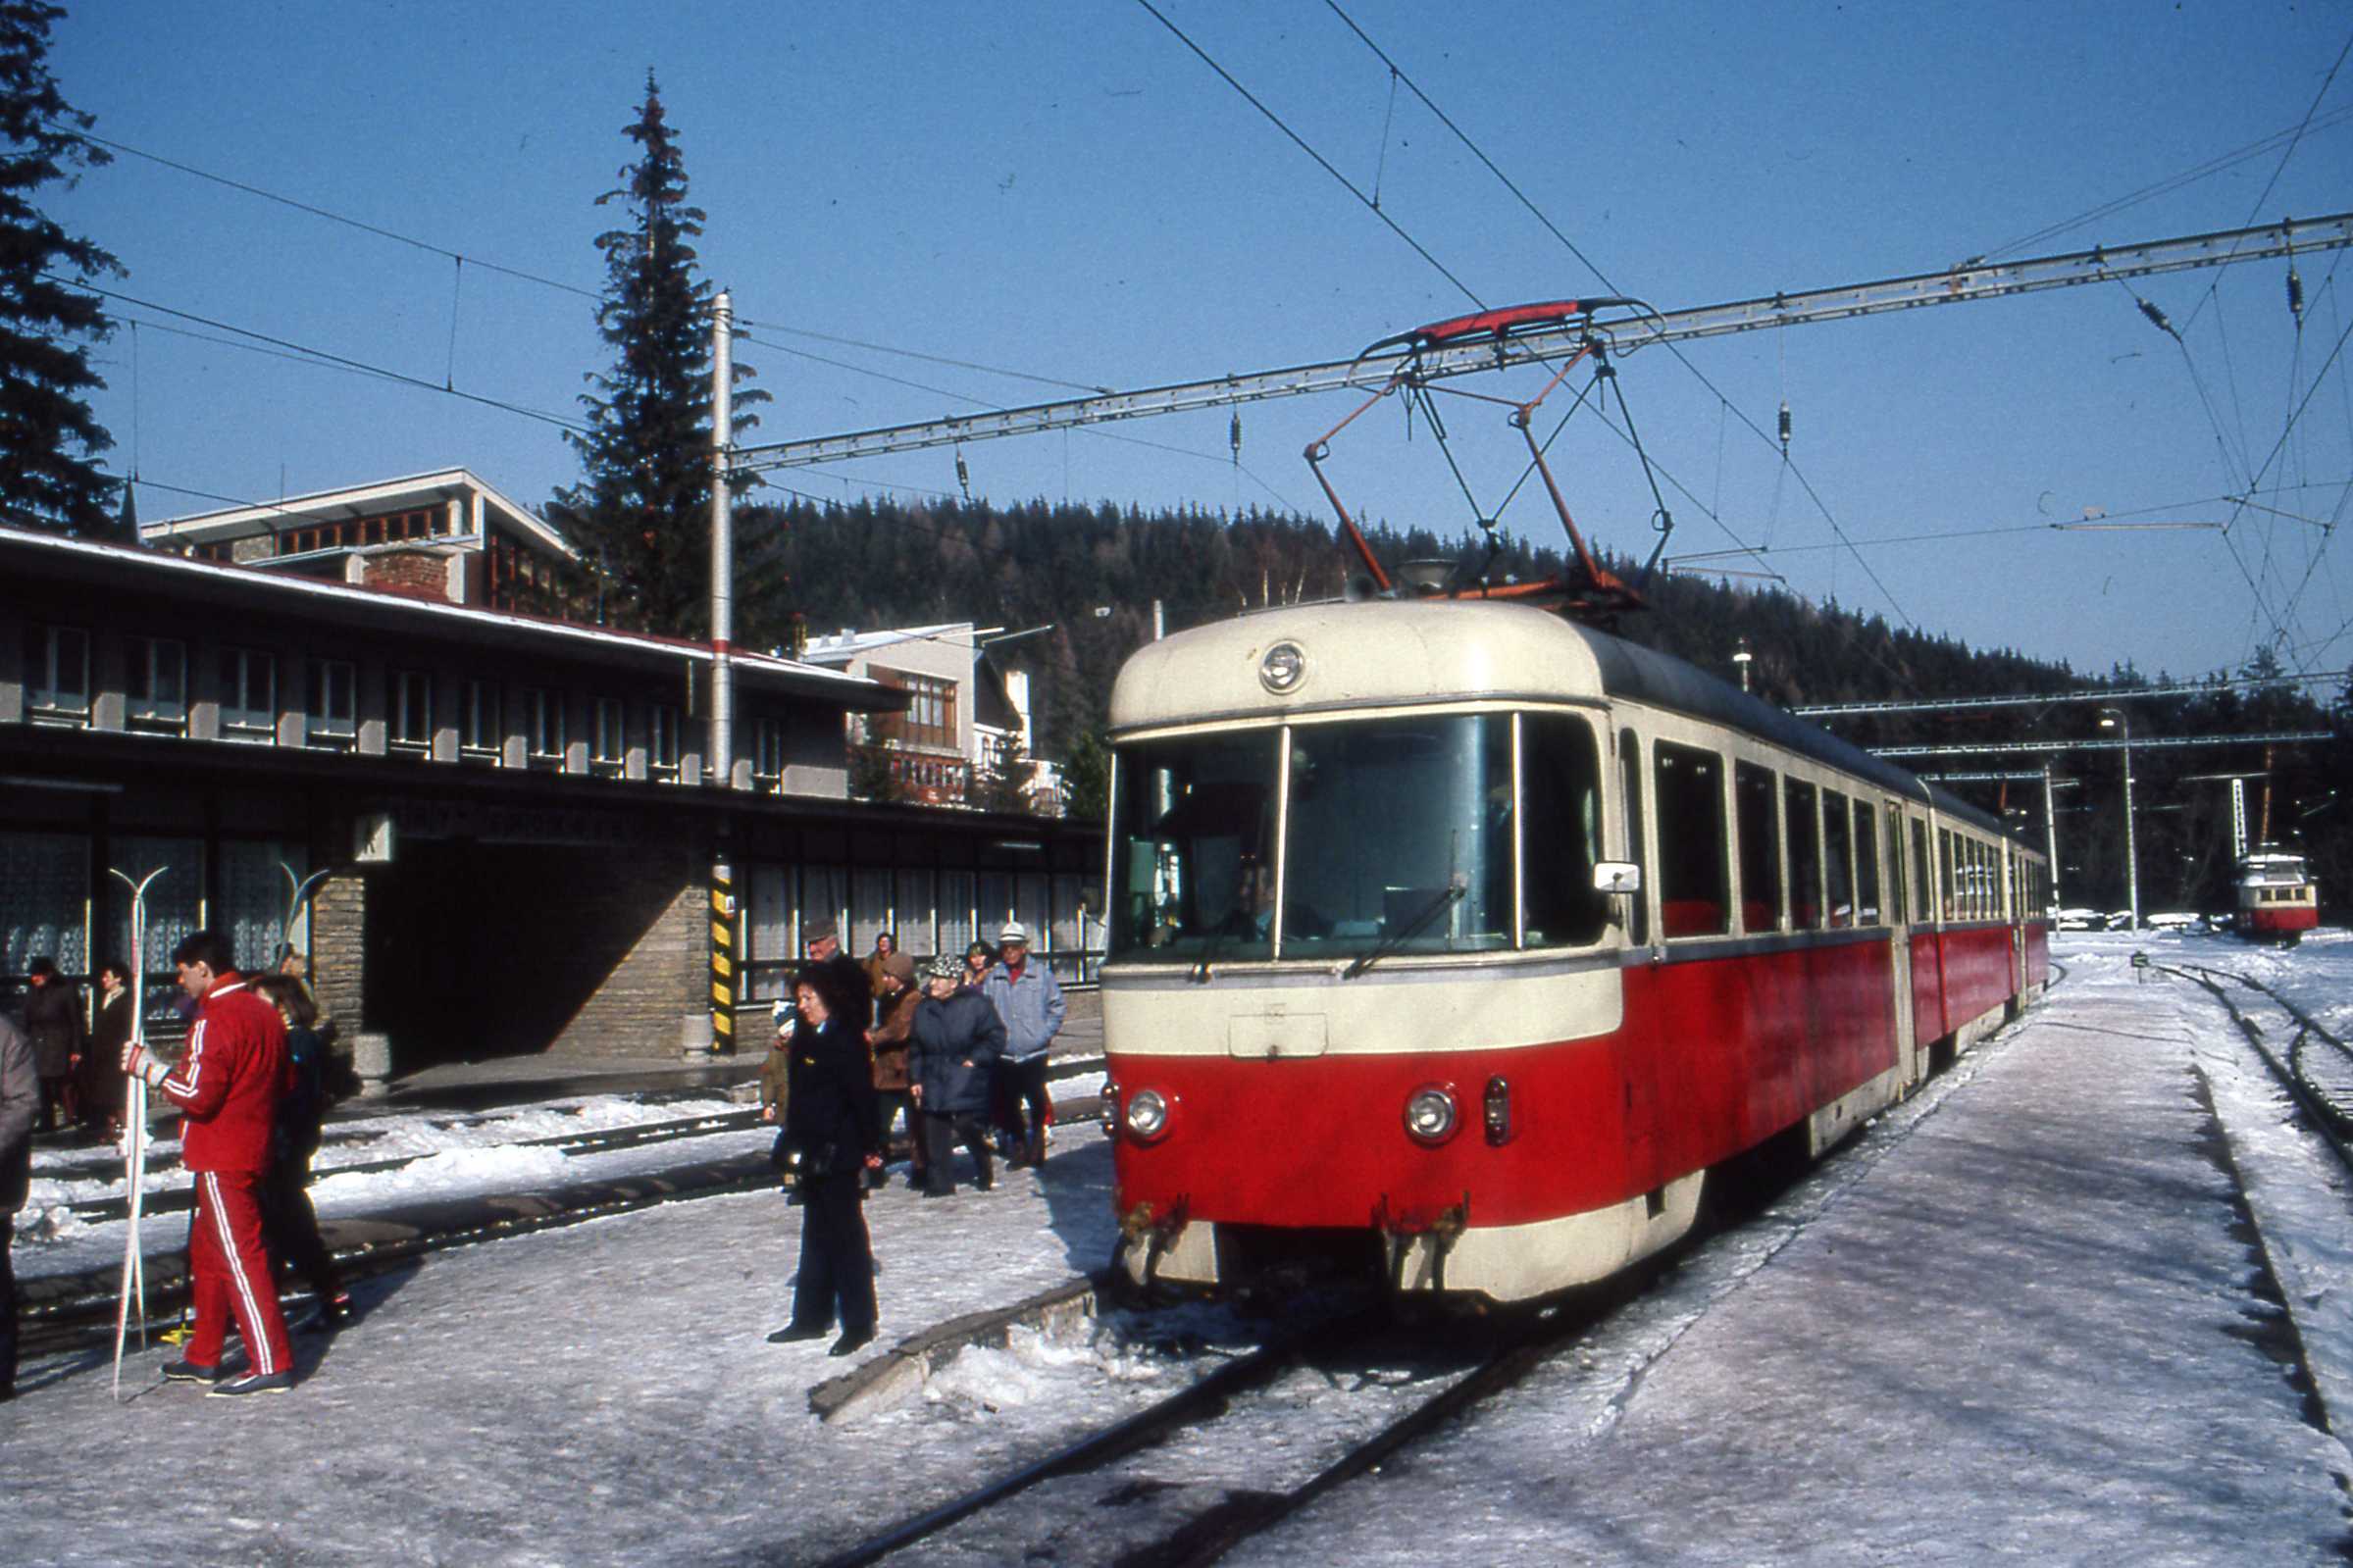 Poprad-_Tatranska_Lomnica-Strbske_Pleso_tram,_Slovakia_1993.jpg